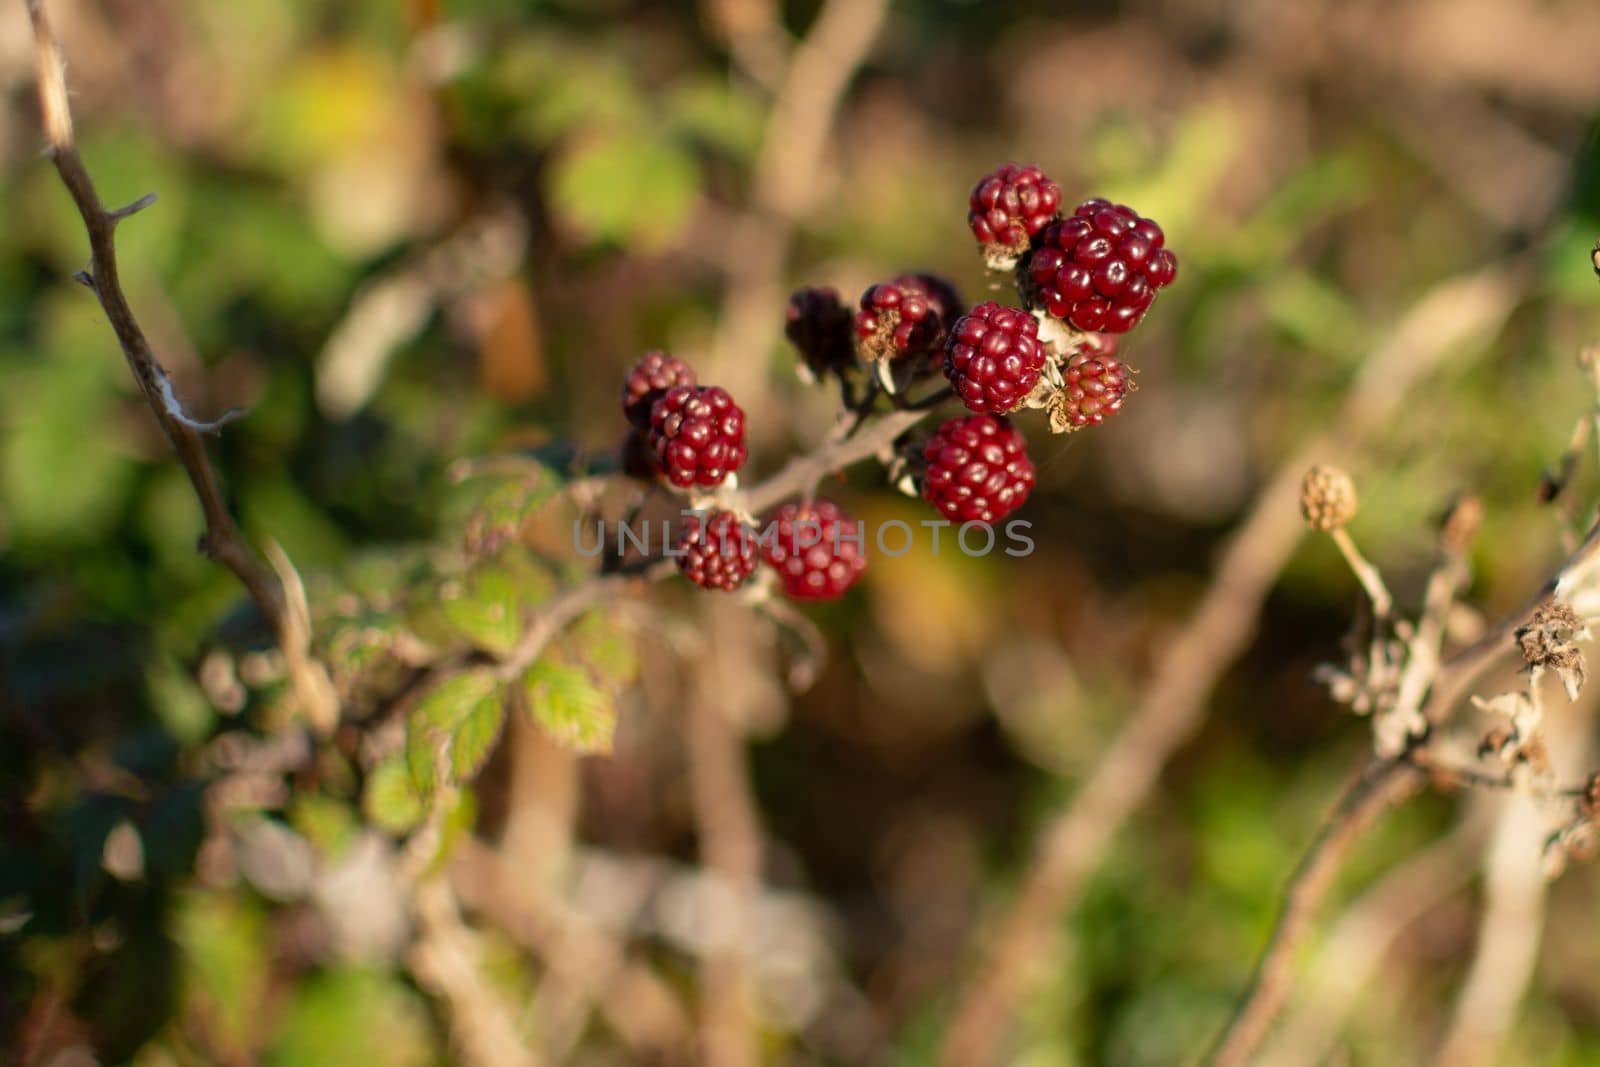 Wild raspberries and blackberries in the nature by scasal15